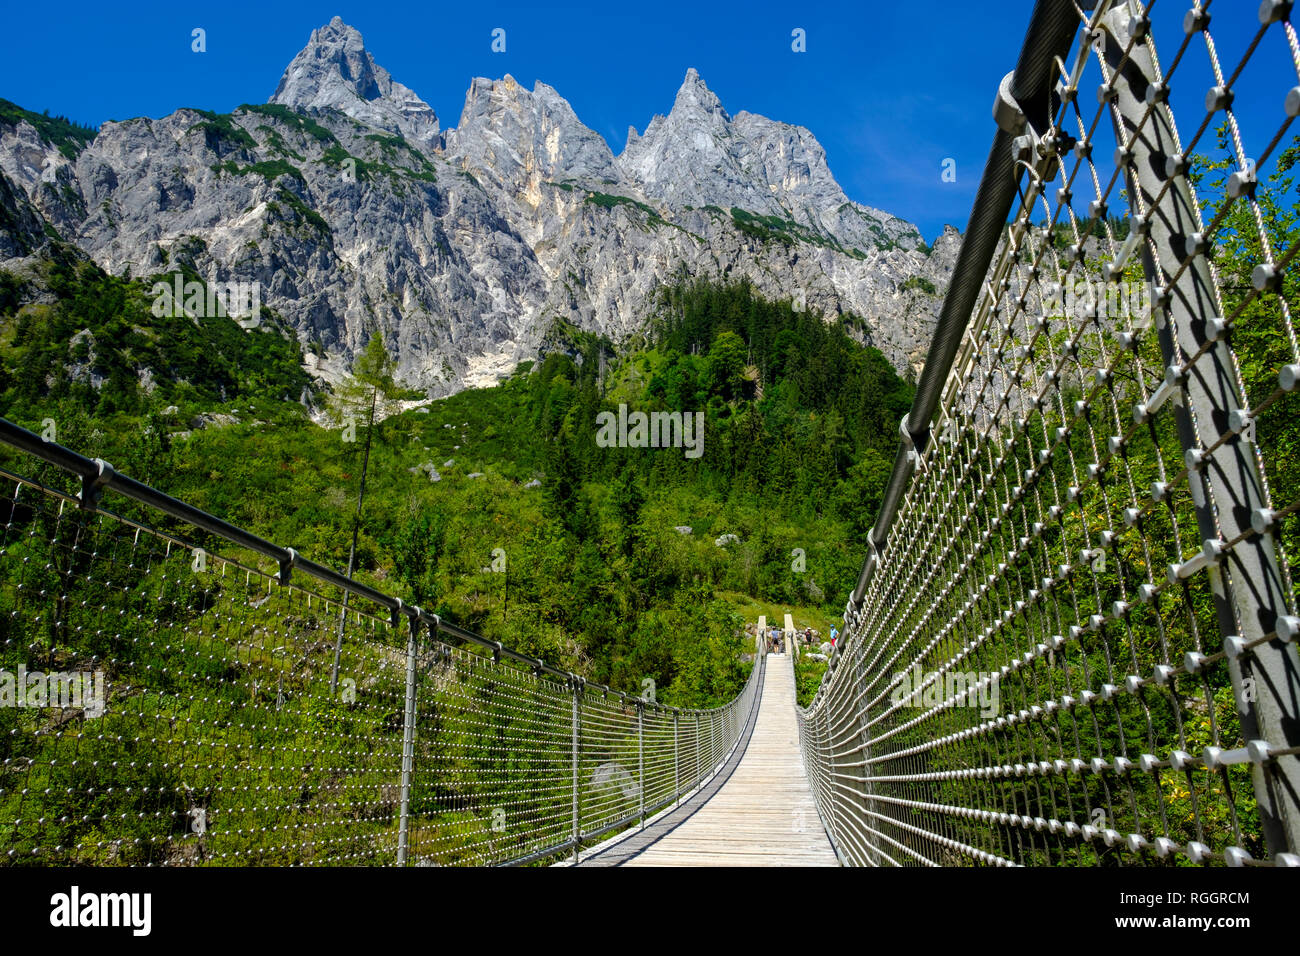 In Germania, in Baviera, Berchtesgadener Land, sulle Alpi di Berchtesgaden, Klausbach Valley, Muehlstuetzhoerner, ponte di sospensione Foto Stock